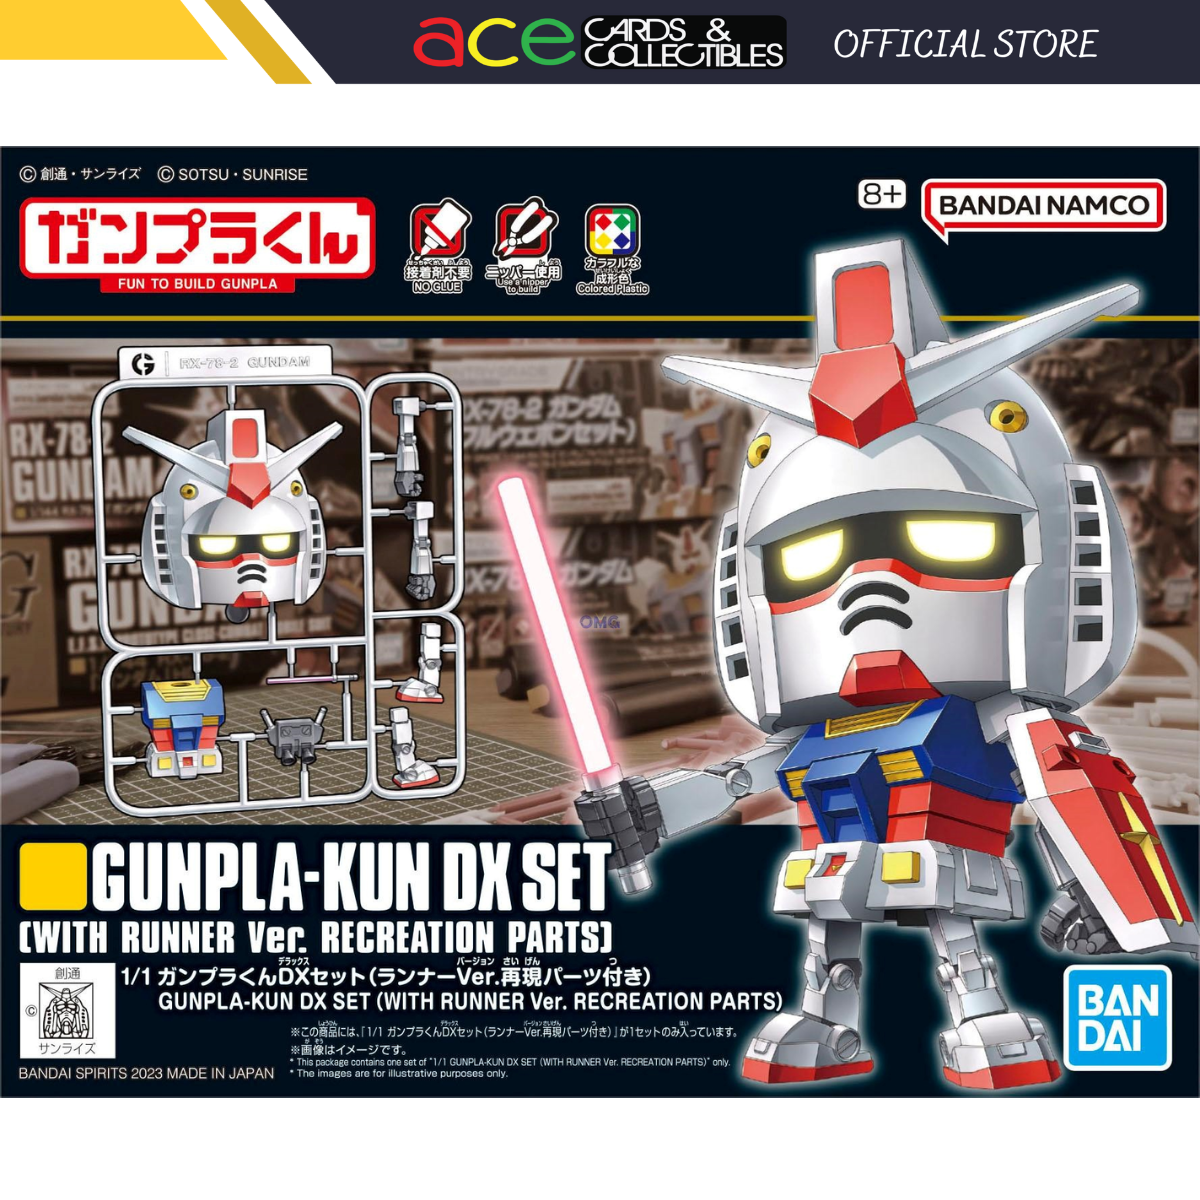 Gunpla-Kun DX Set With Runner Ver Recreation Parts-Bandai-Ace Cards & Collectibles